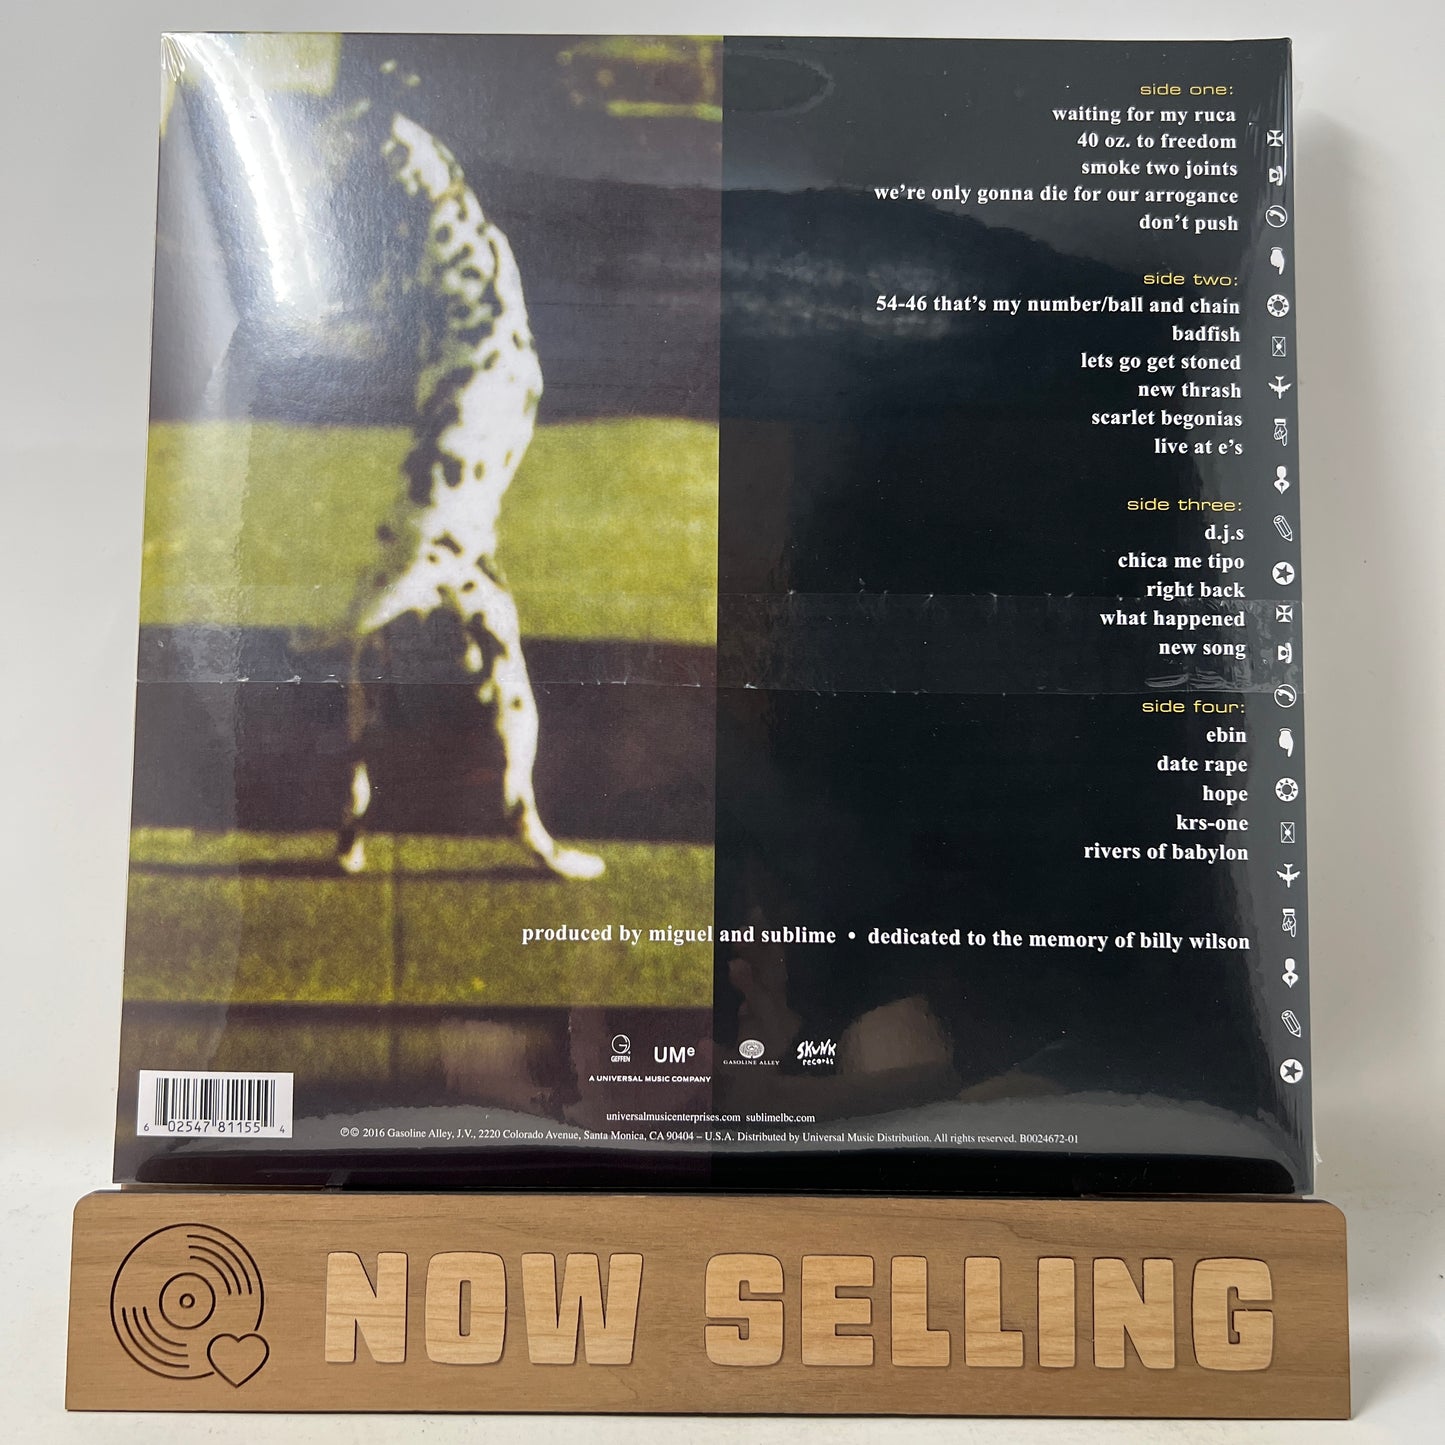 Sublime - 40oz. To Freedom Vinyl LP Reissue SEALED